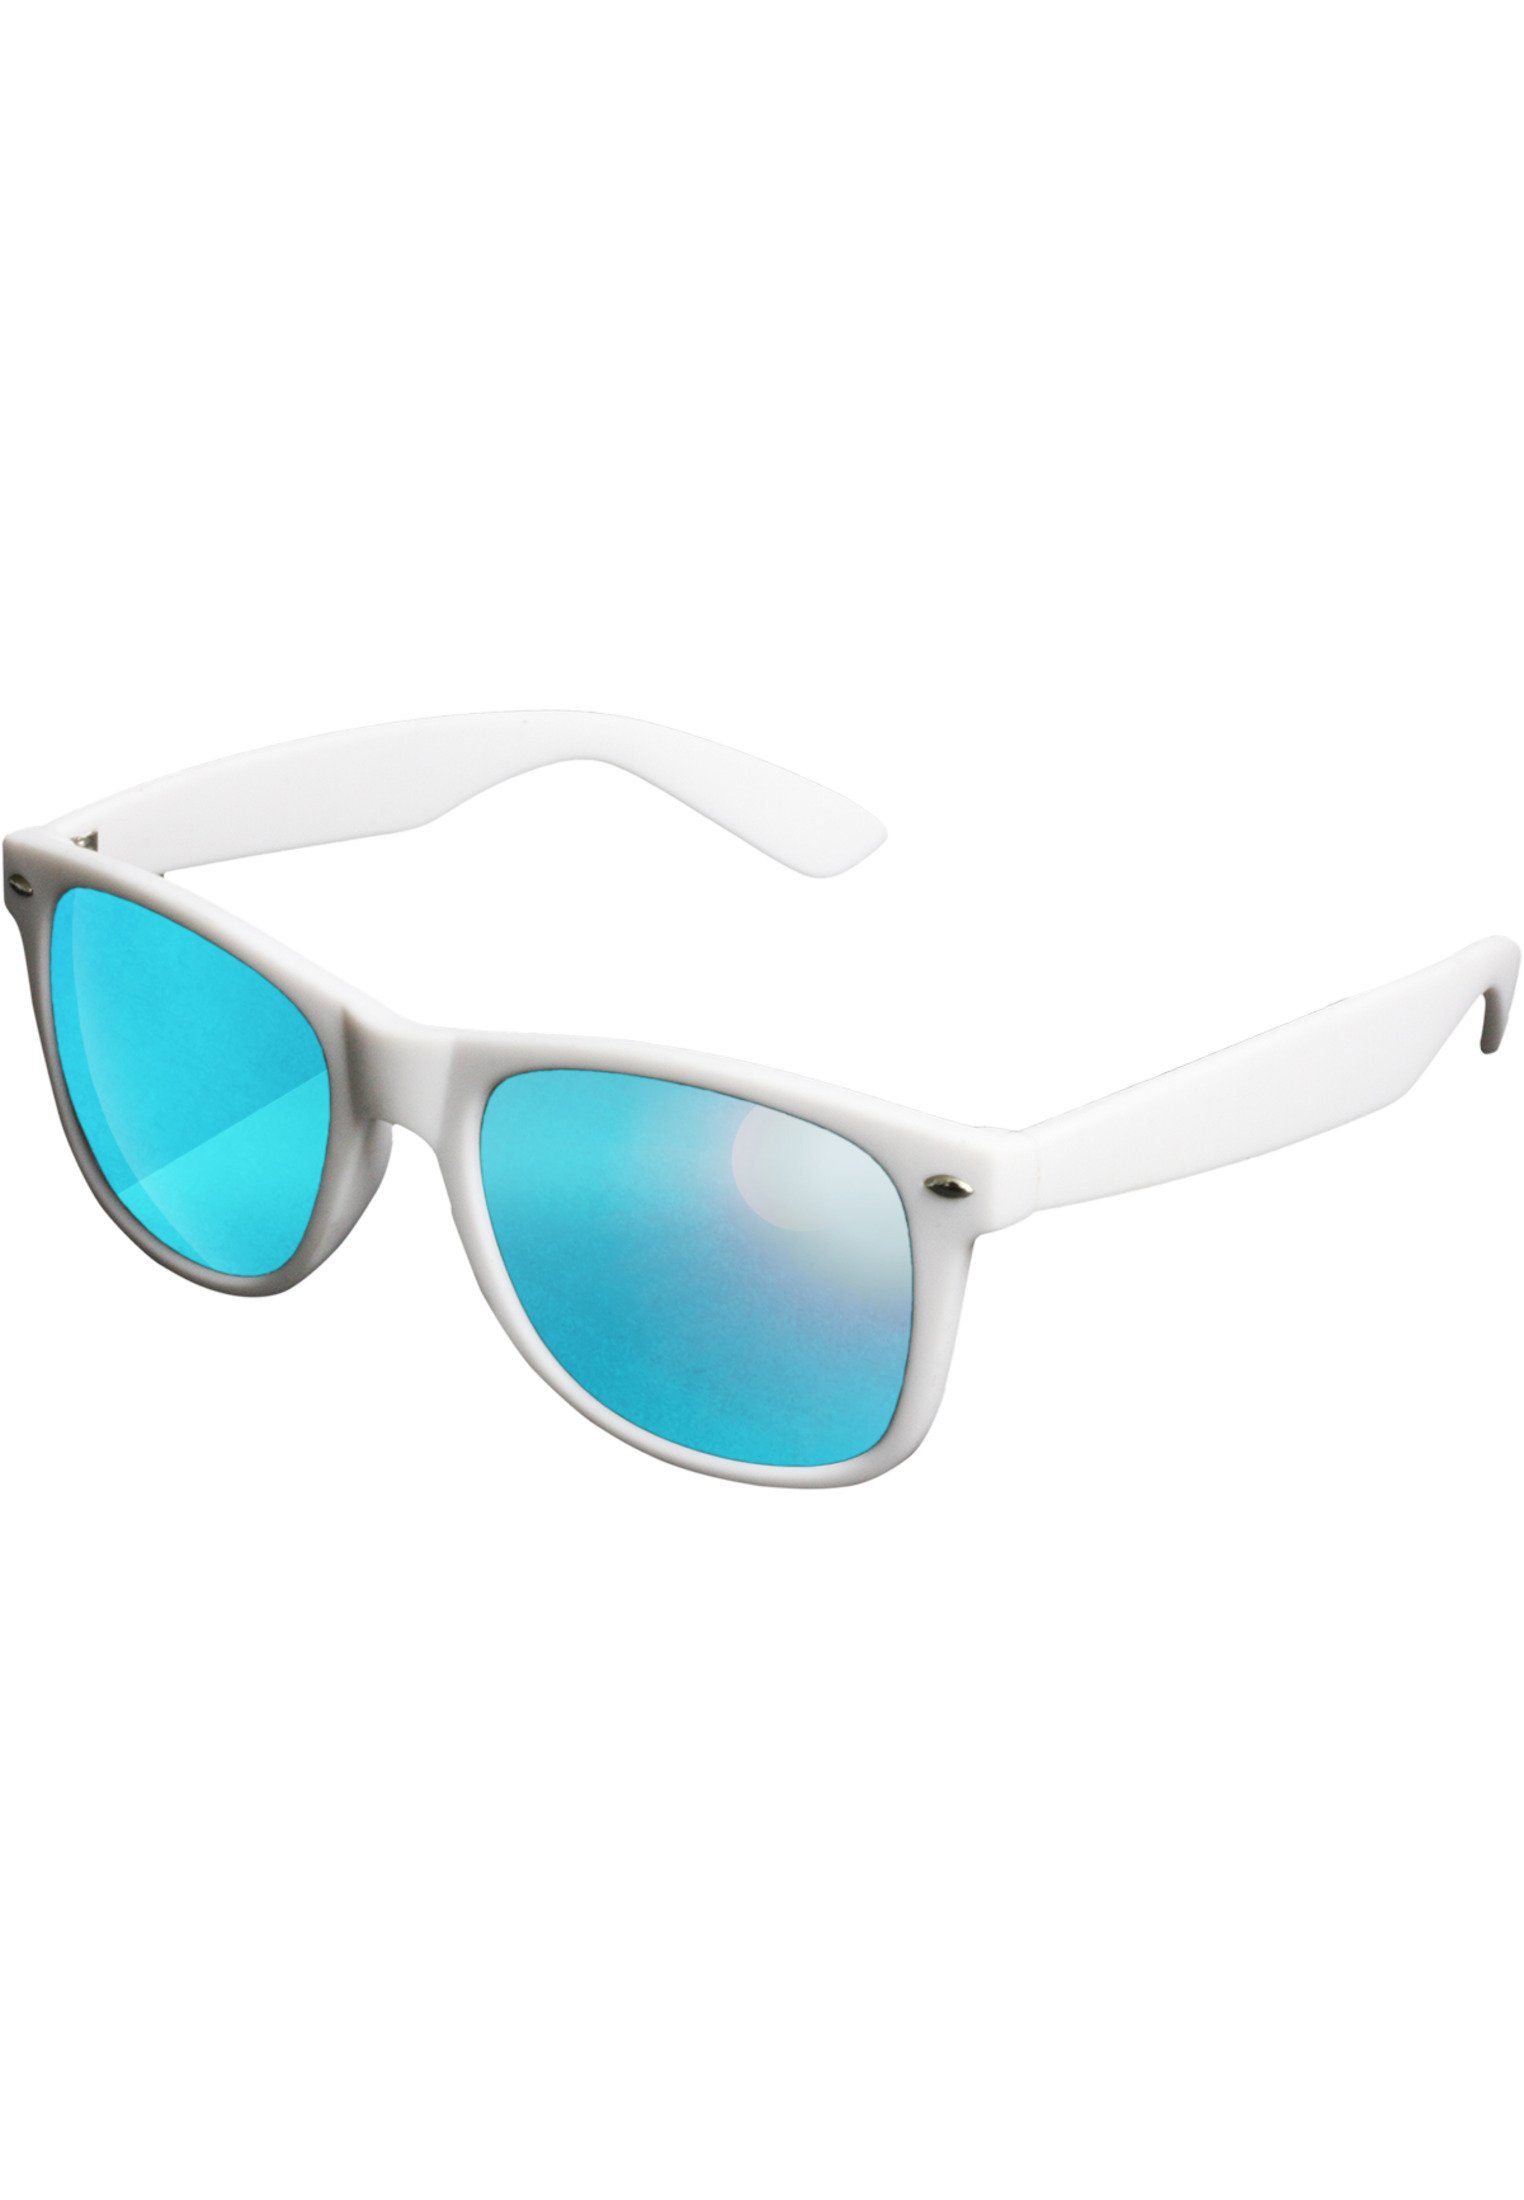 MSTRDS Sonnenbrille Mirror Accessoires Sunglasses Likoma wht/blu